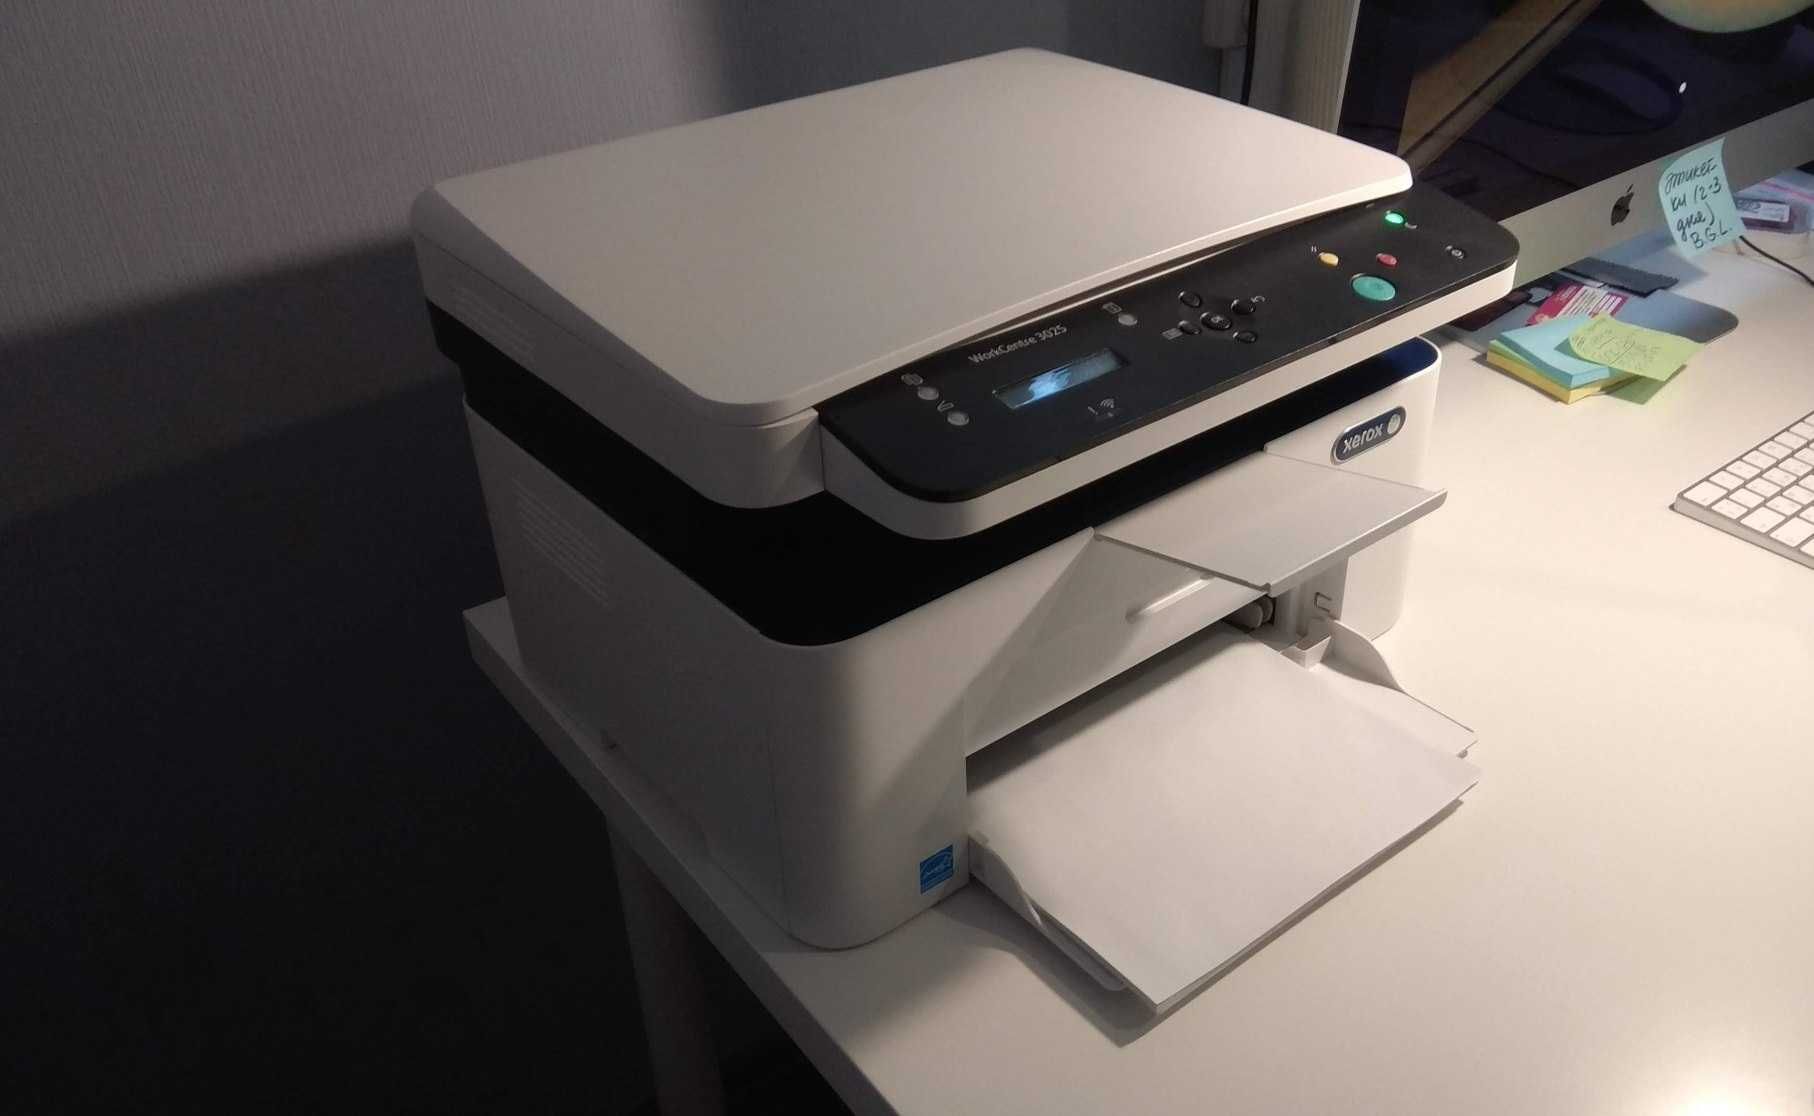 МФУ Xerox workcentre 3025 компактный, современный, wi-fi